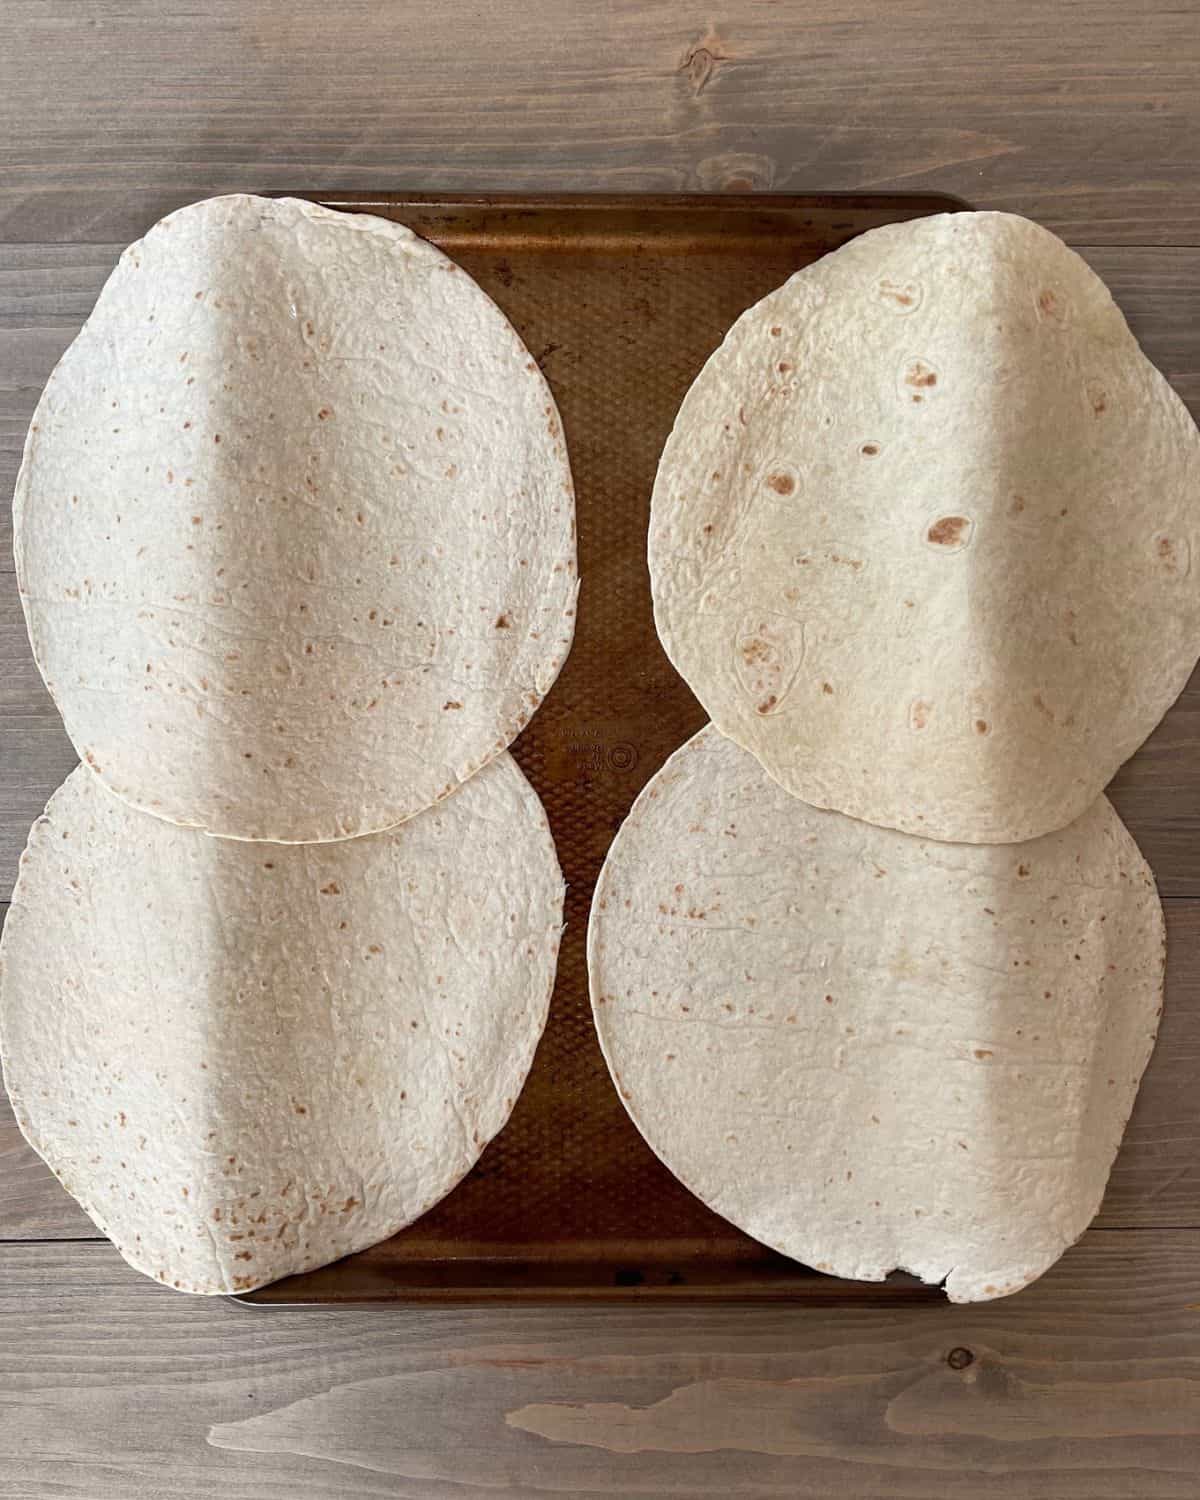 Two tortilla shells on each long edge of the baking sheet.